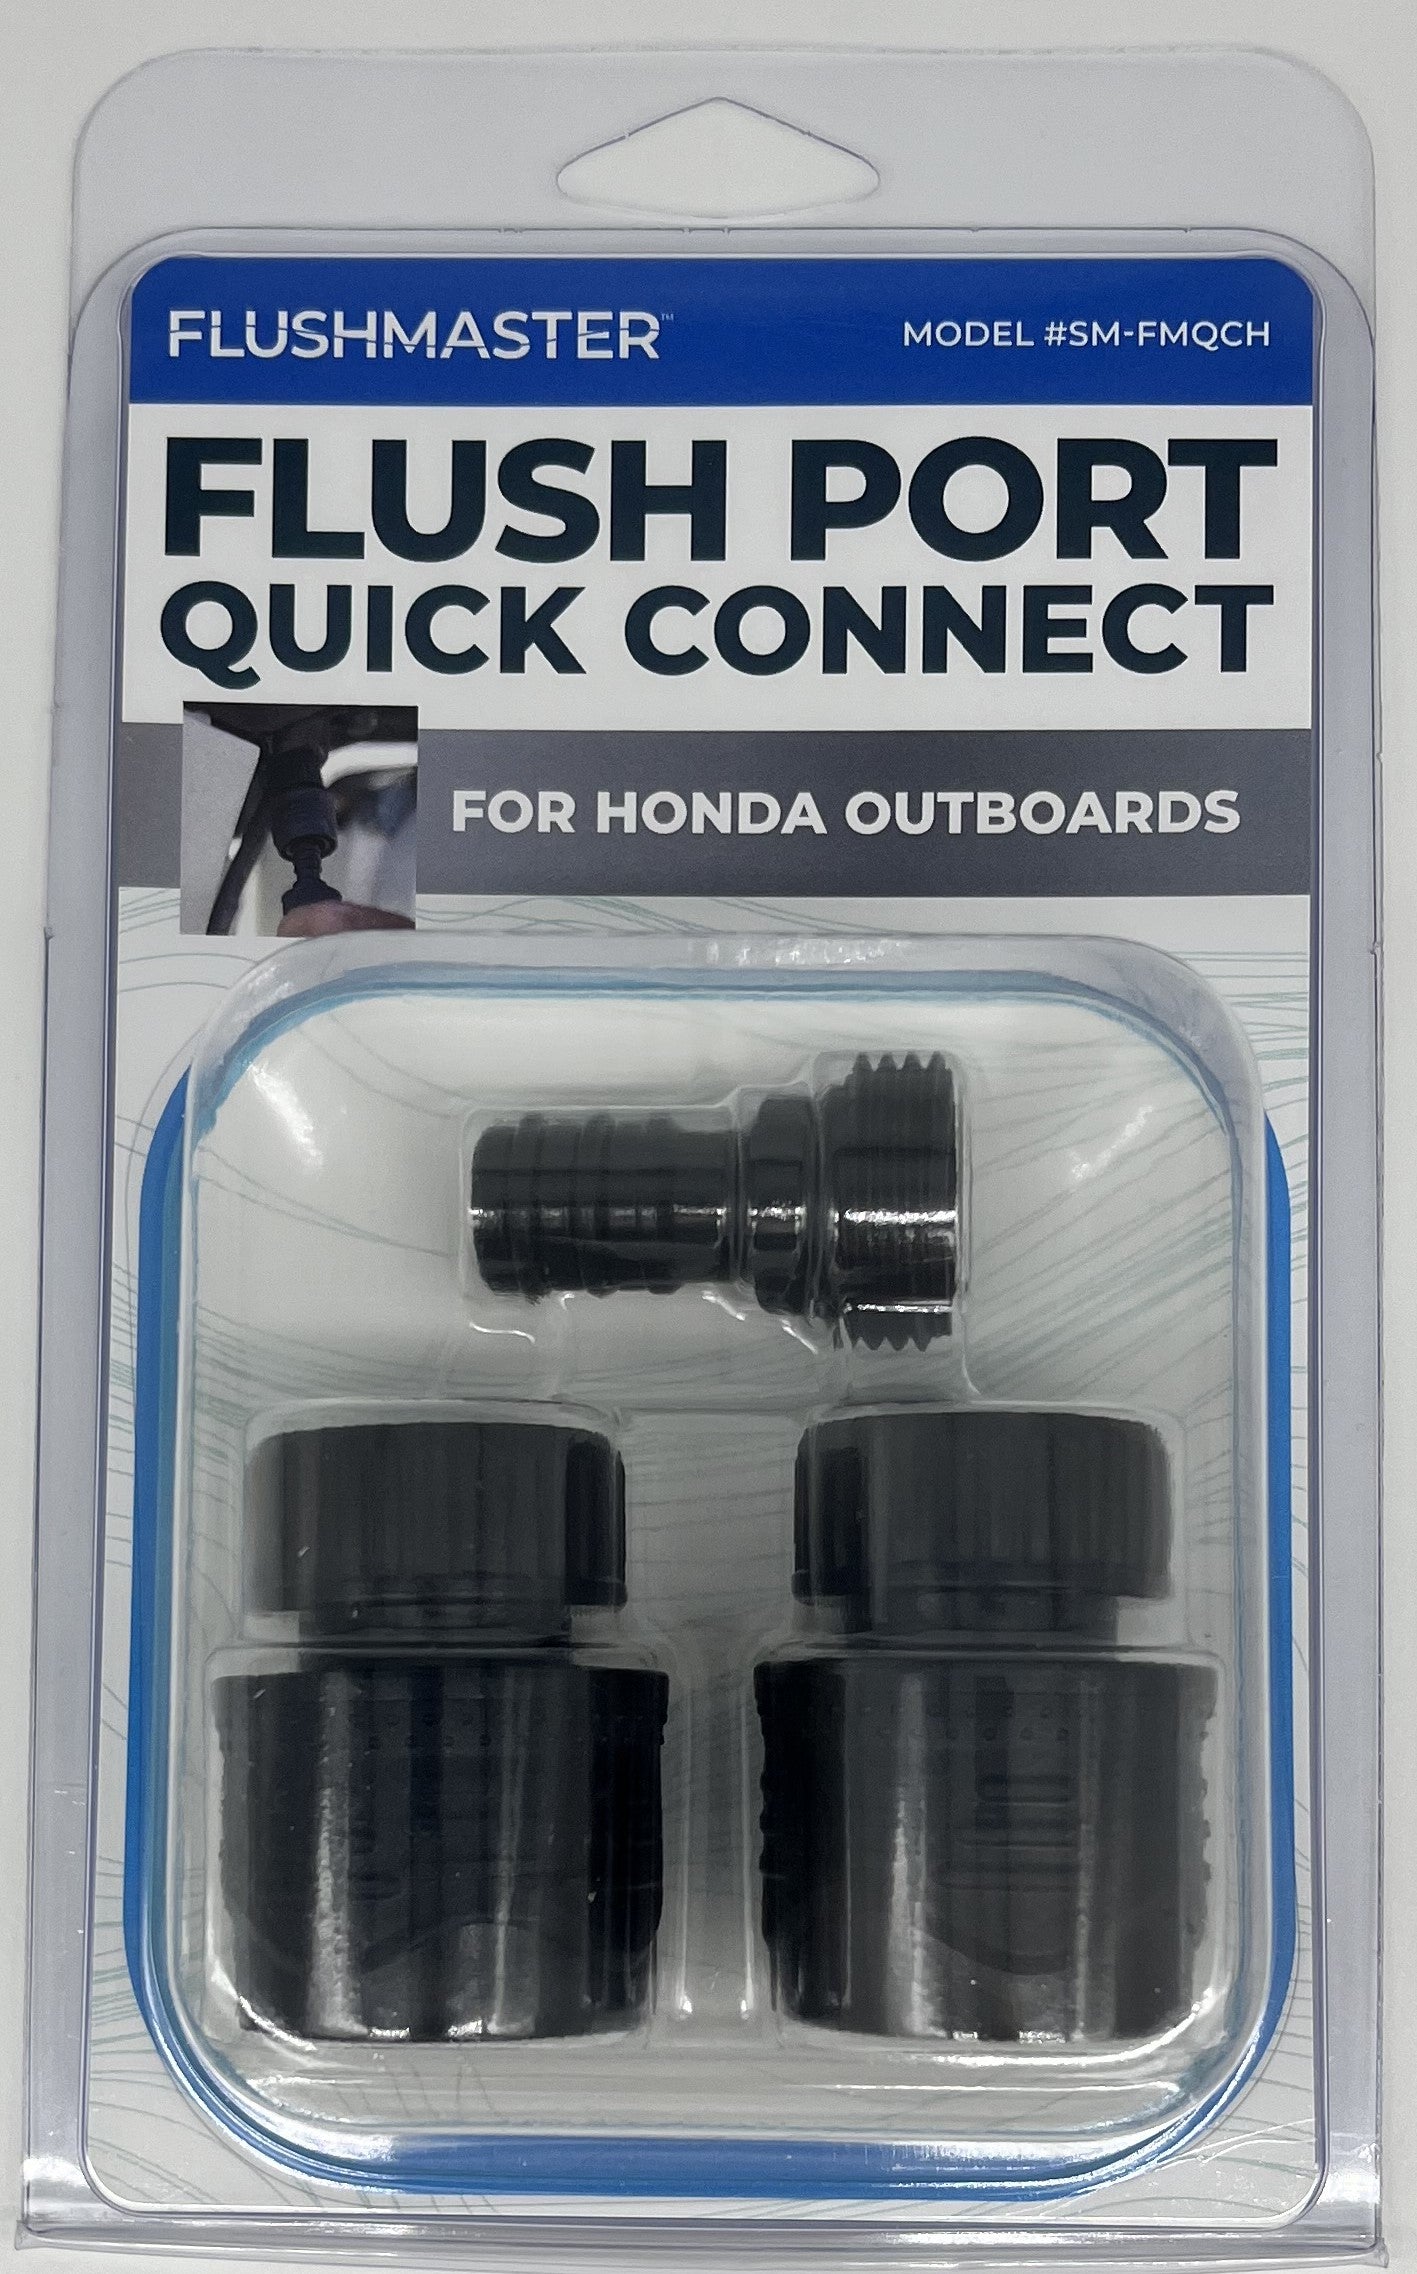 Flush Port Quick Connect for Honda